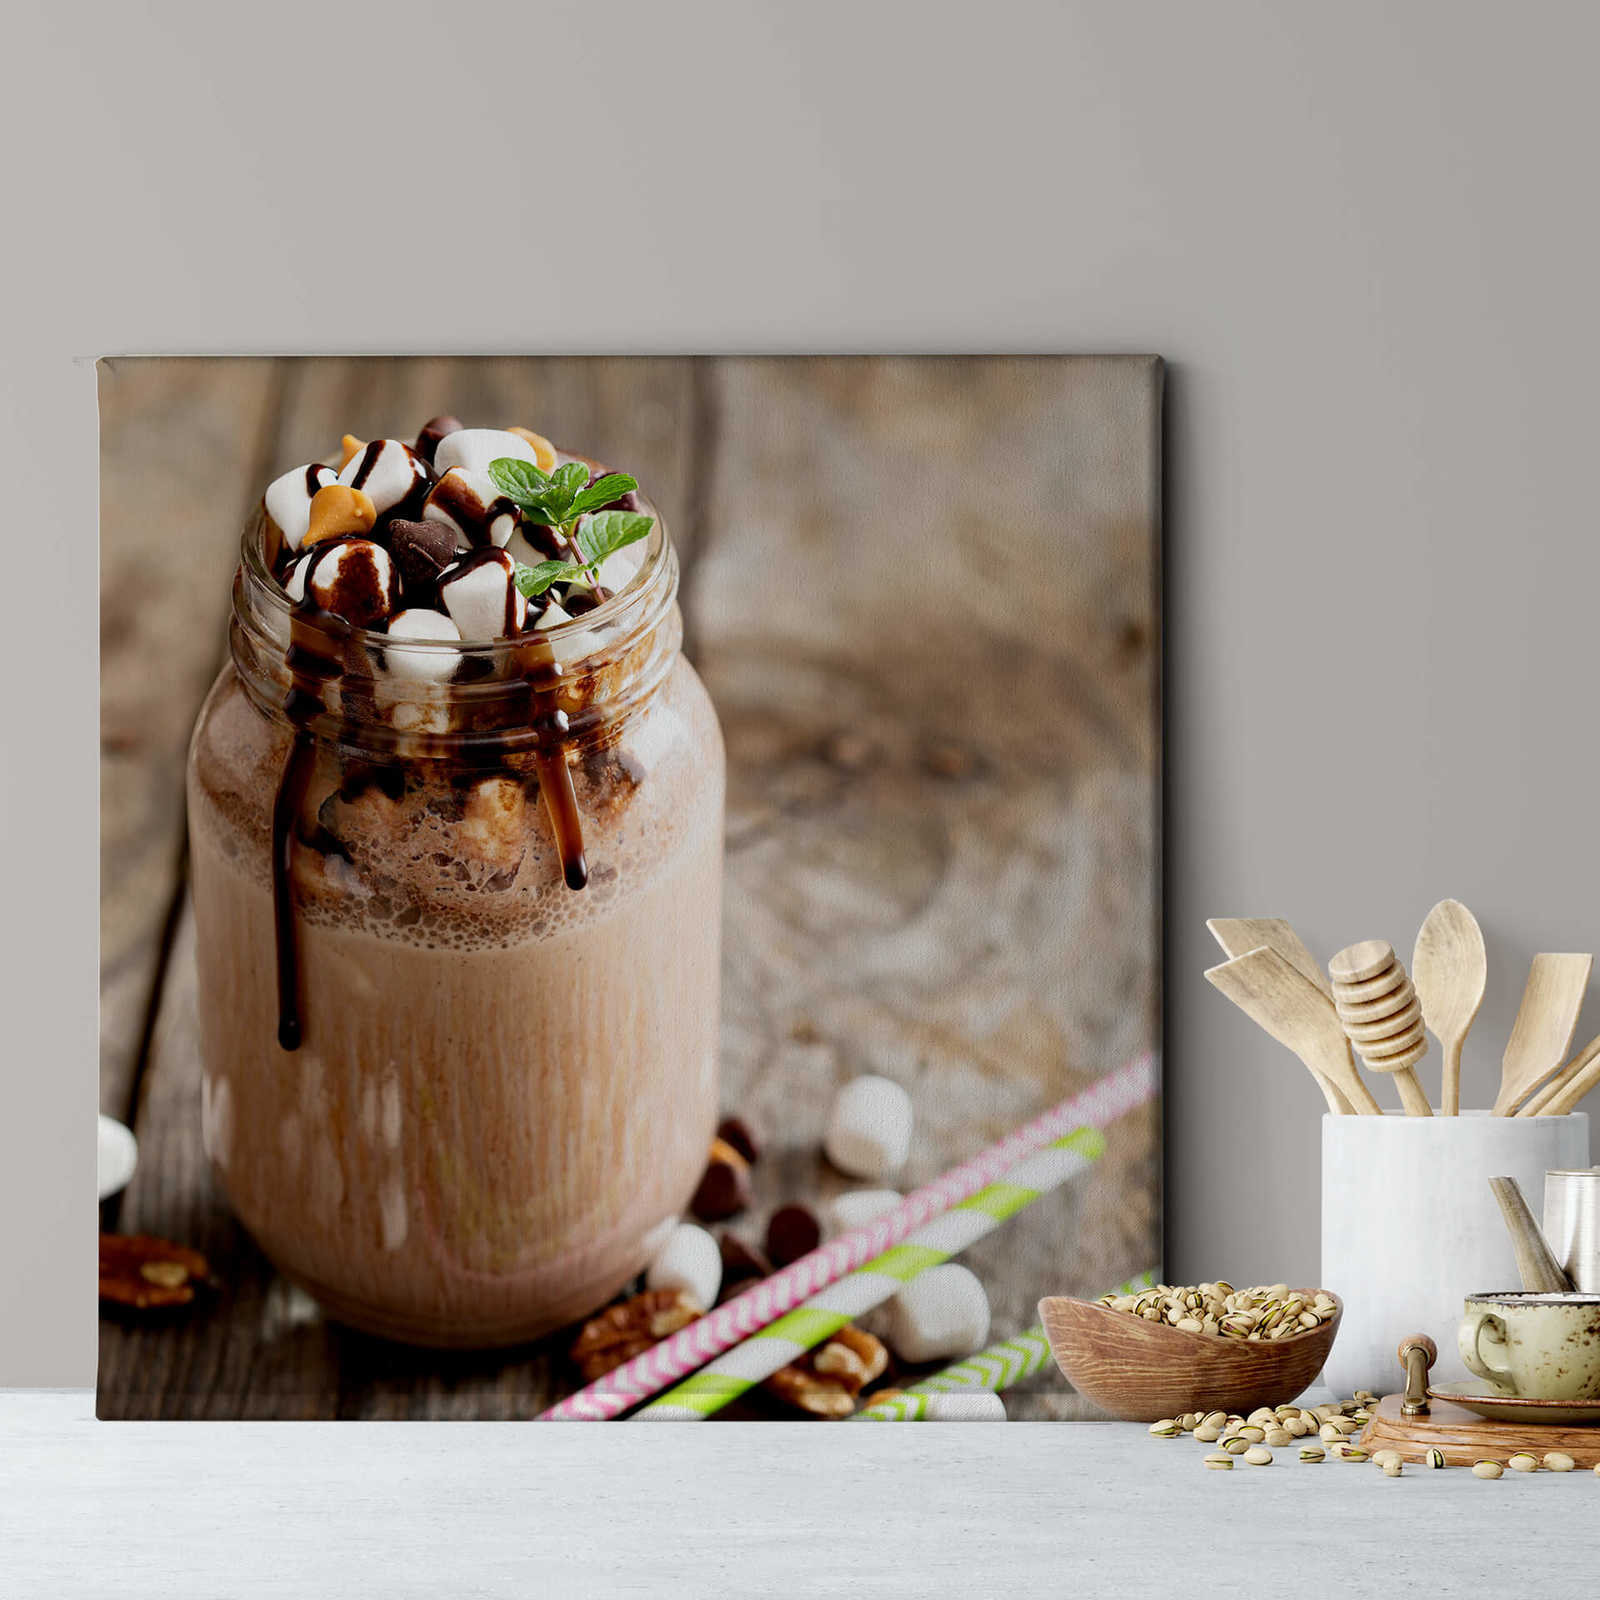             Square canvas print milkshake chocolate – brown
        